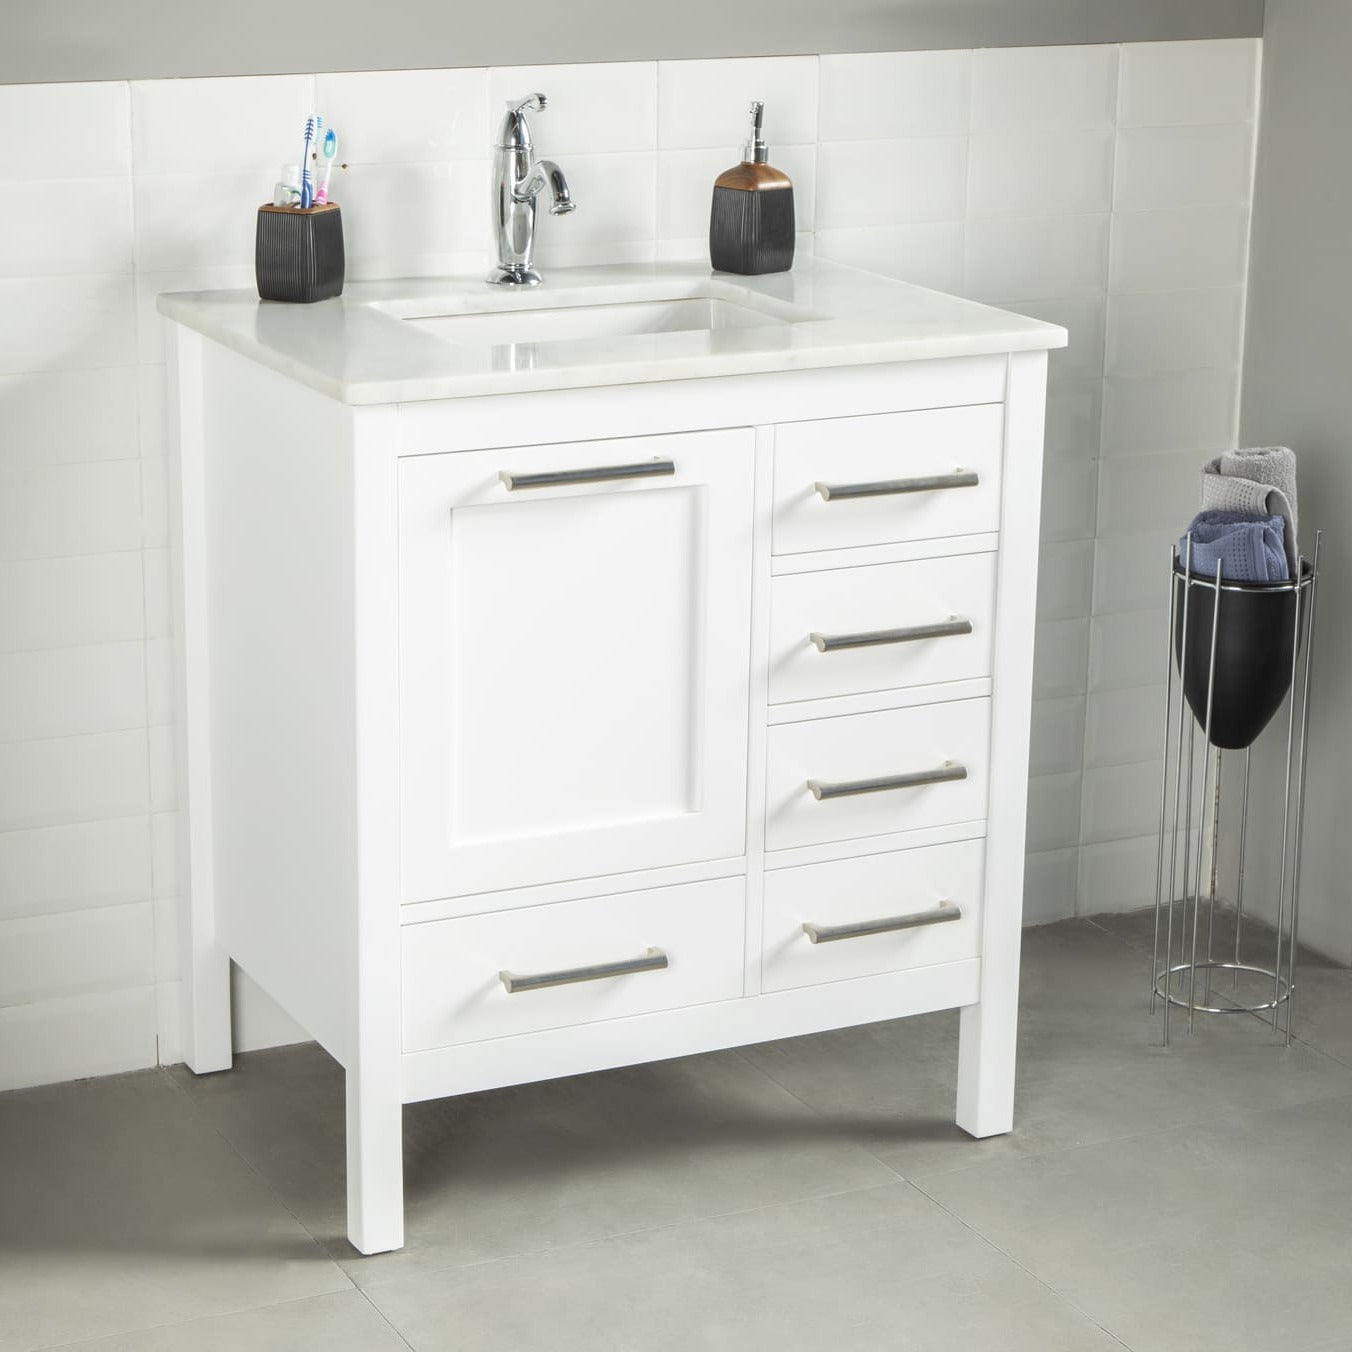 Ahley Bathroom Vanity Homelero 30"  #size_30"  #color_white #hardware_brushed nickel